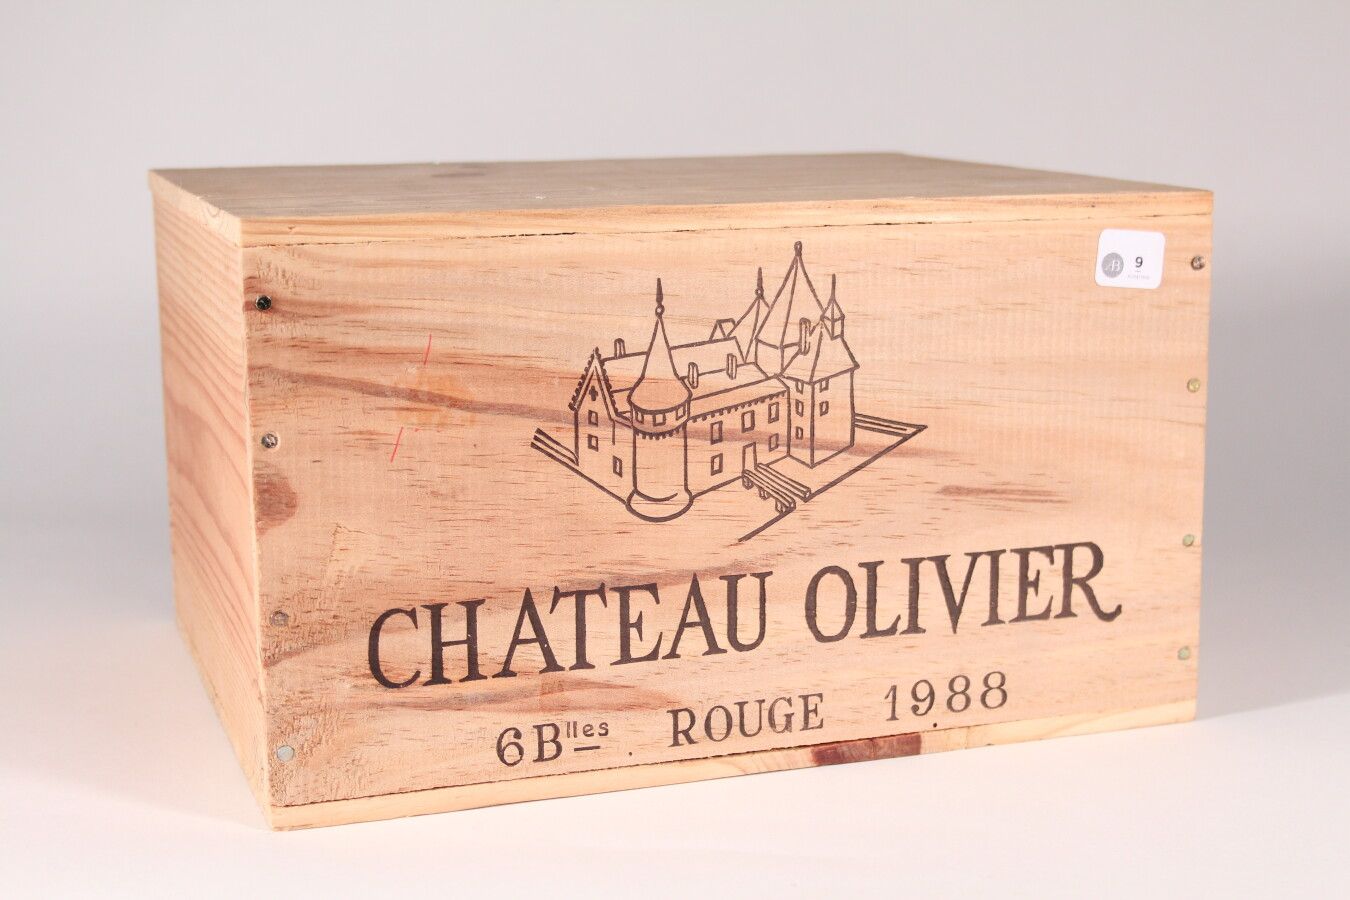 Null 1988 - Château Olivier

Pessac-Léognan Rosso - 6 blles CBO